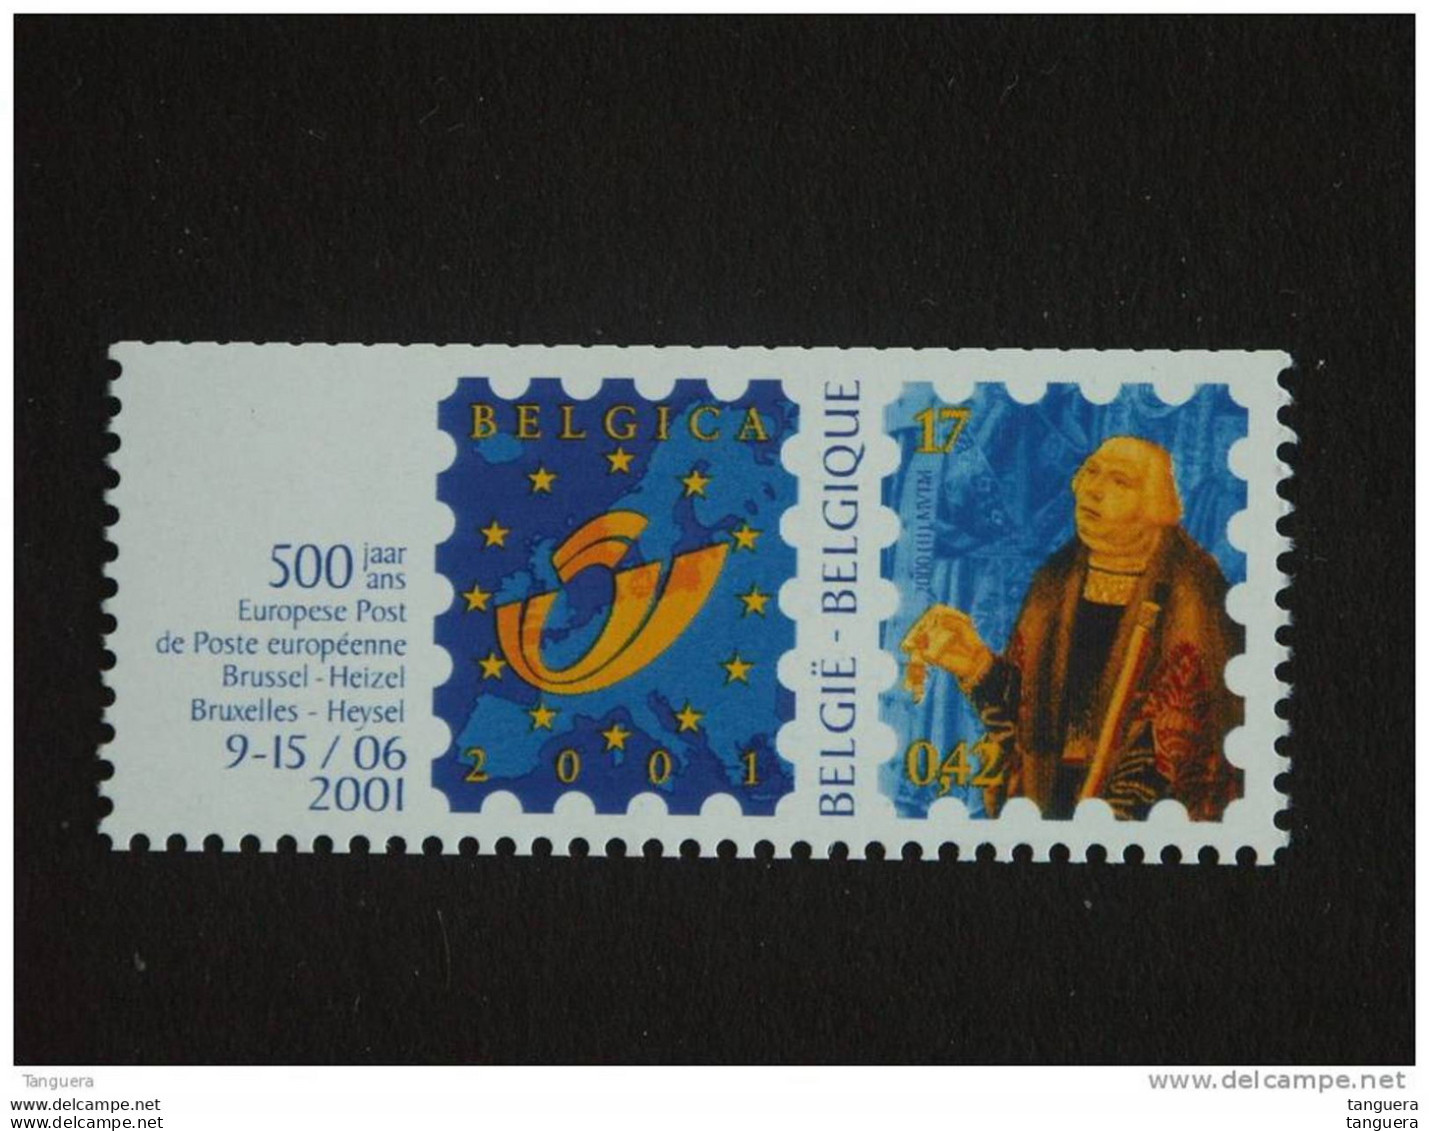 België Belgique 2000 Belgica 2001 EXPO Turn & Tassis 500 Jaar Europese Post Rolzegel Rouleau 2932 R97 MNH ** - Coil Stamps